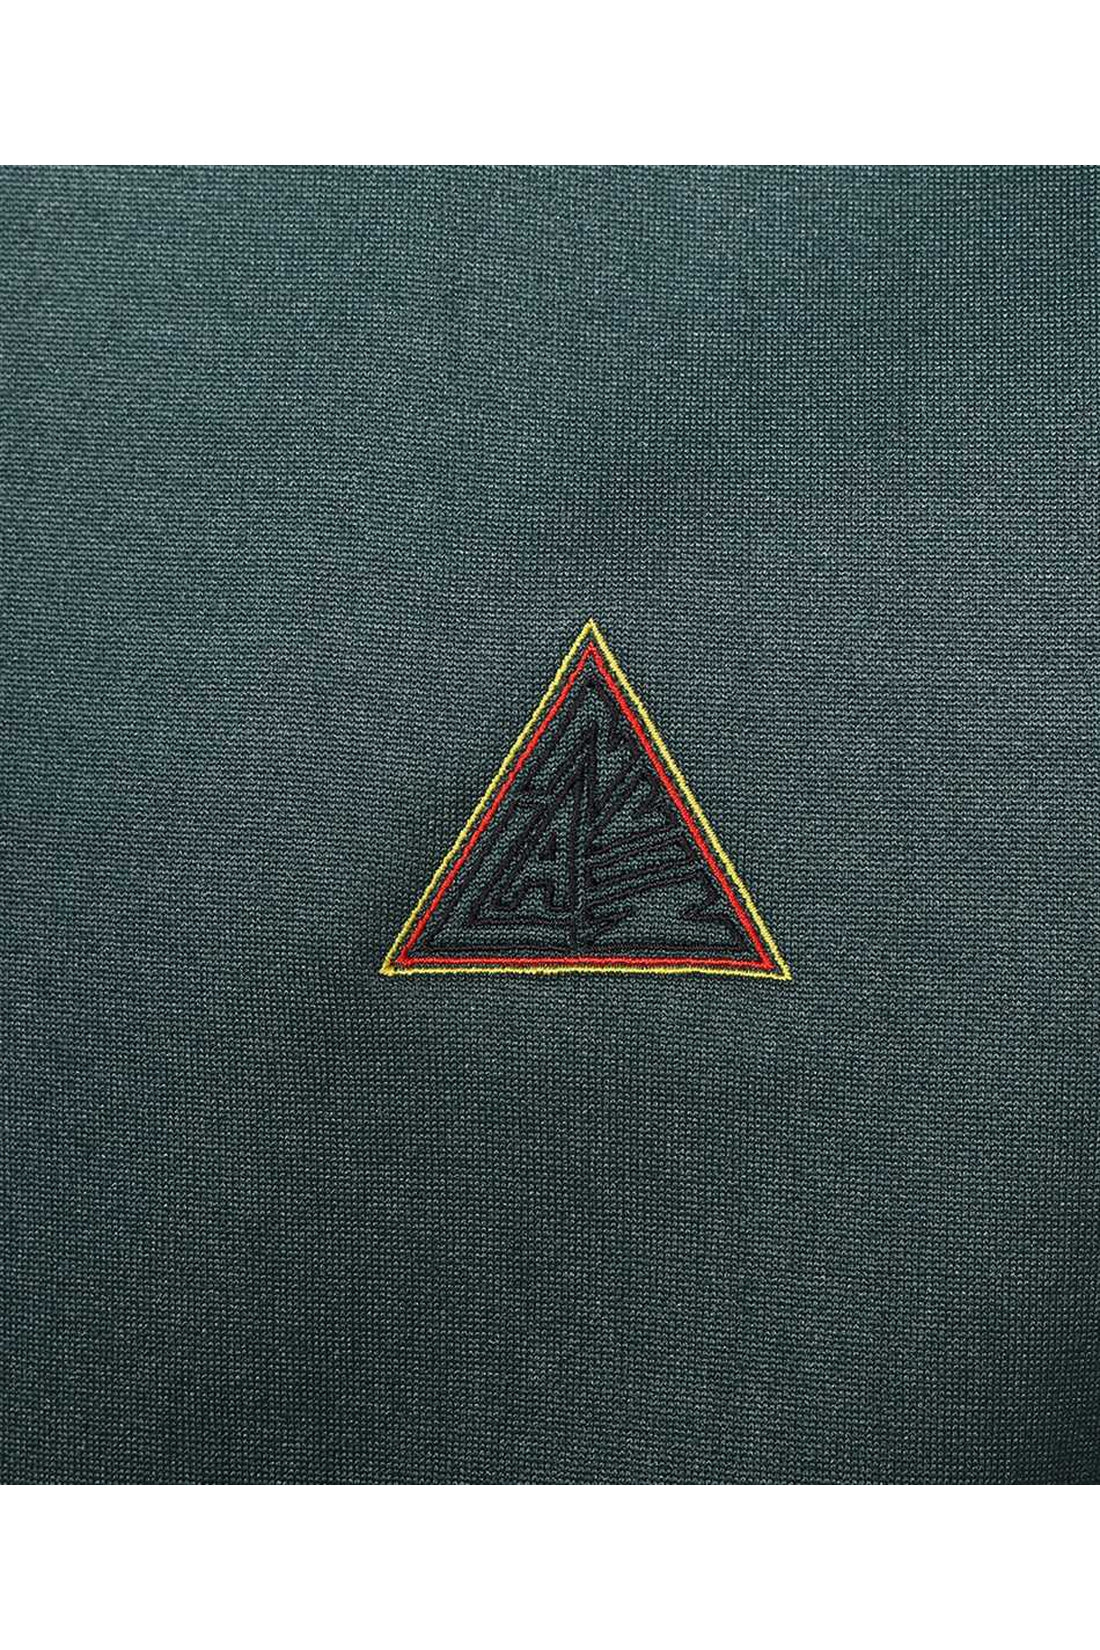 Lanvin-OUTLET-SALE-Logo full-zip sweatshirt-ARCHIVIST